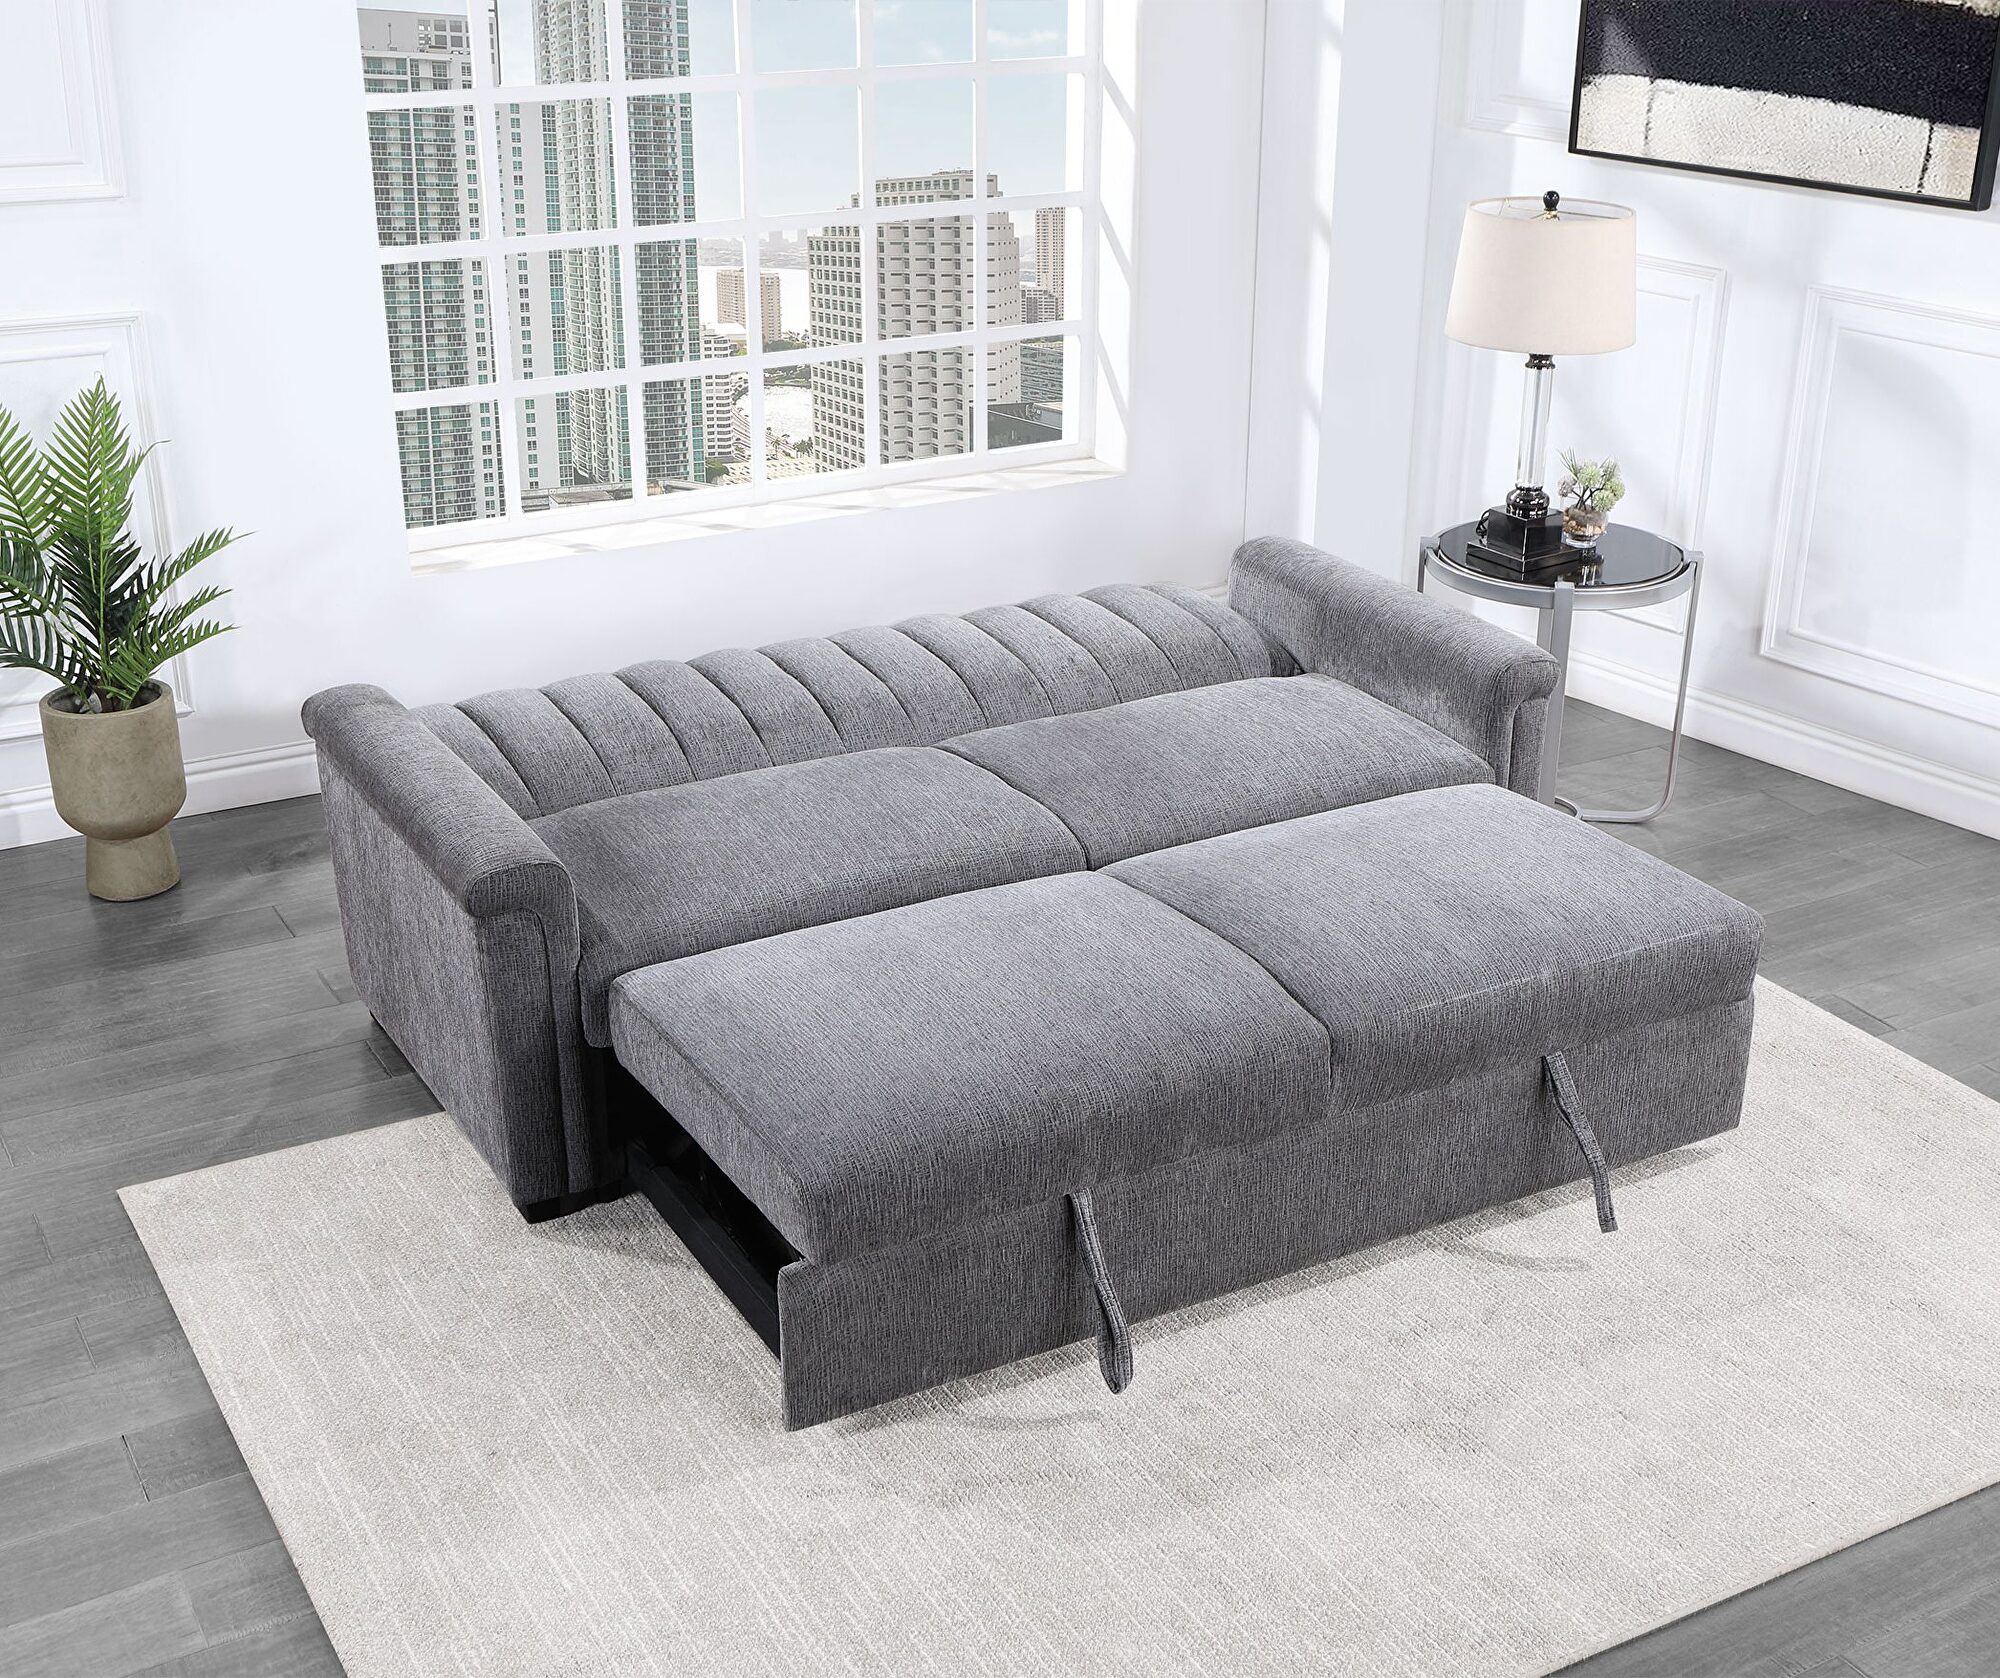 SOFA Global | Comfyco Bed GREY-PULL Gray U0201-DARK G0201 BED OUT Sofa